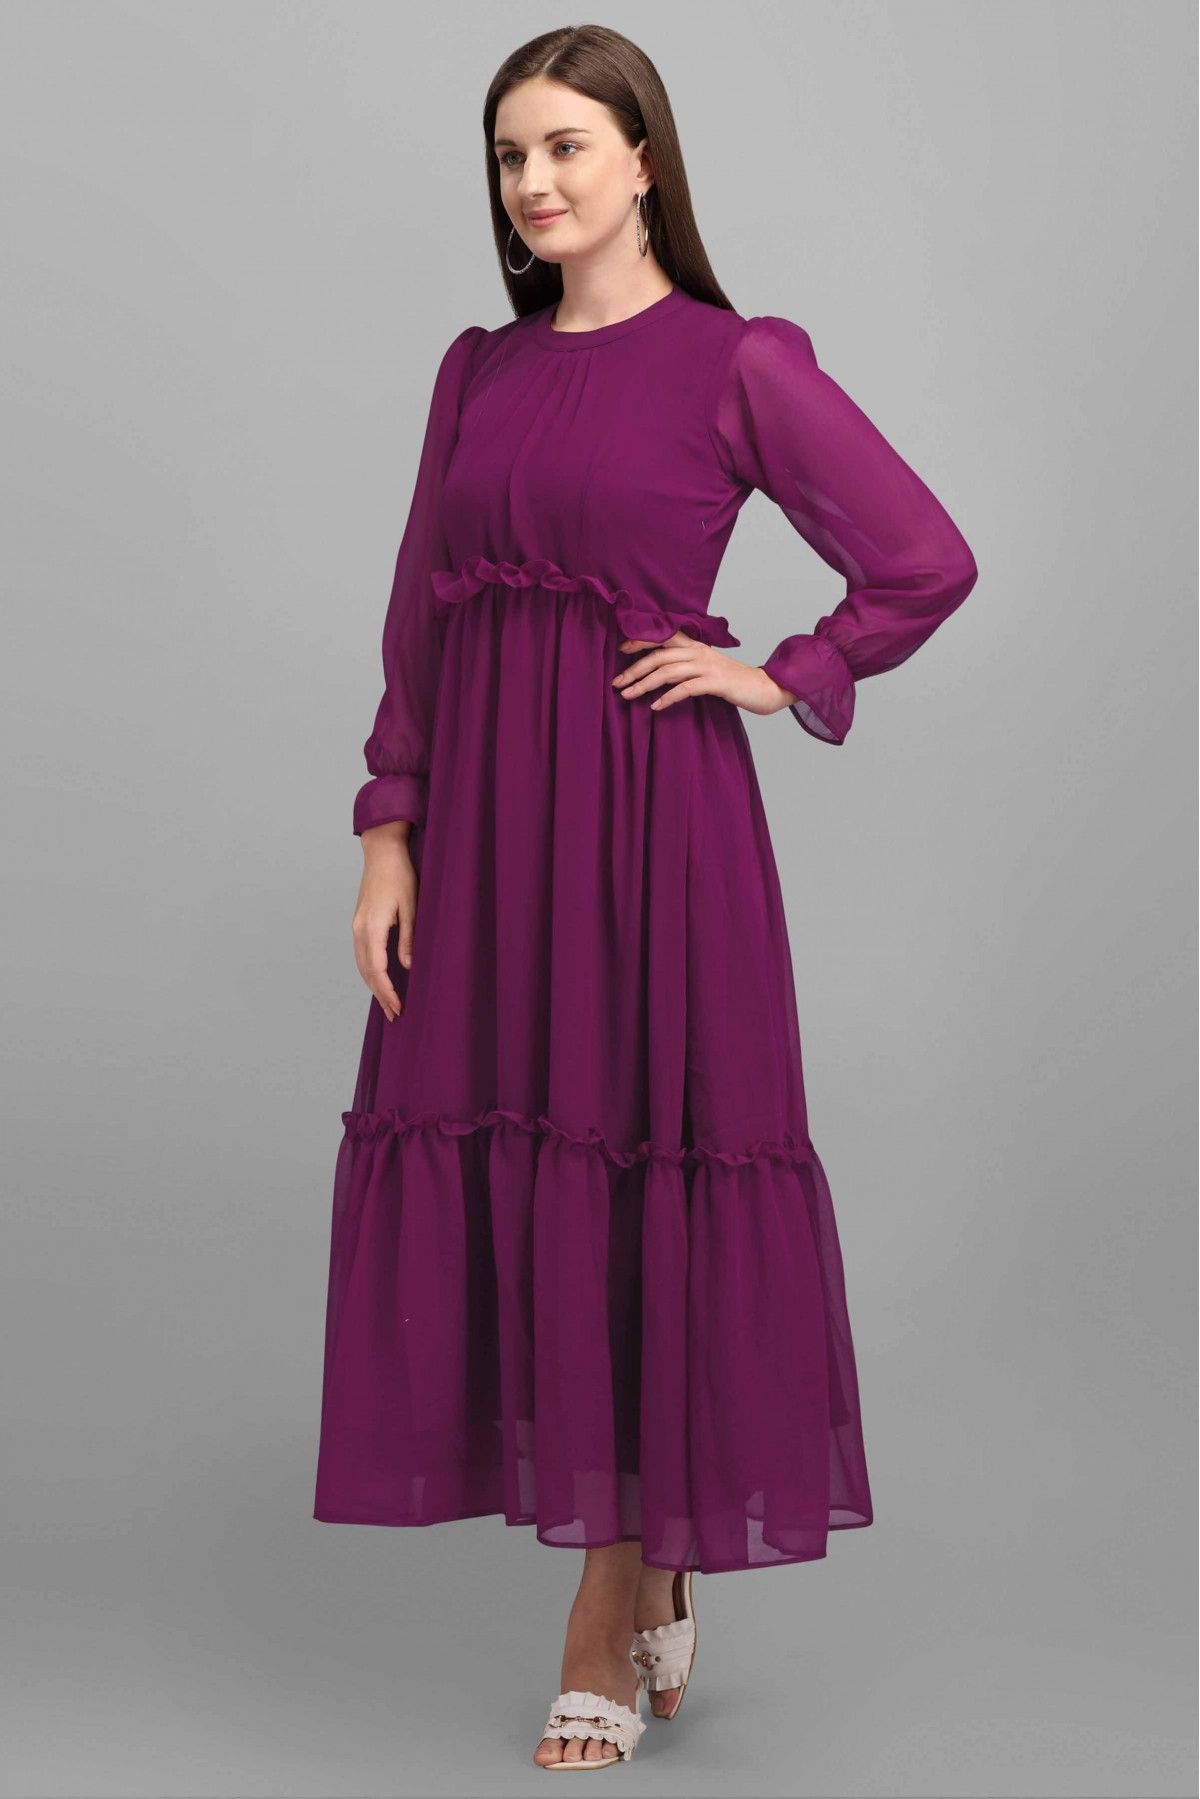 Glonme Long Sleeve Full Length Dress for Women Sexy Work Maxi Dresses Swing  Solid Color Dress Purple XL - Walmart.com